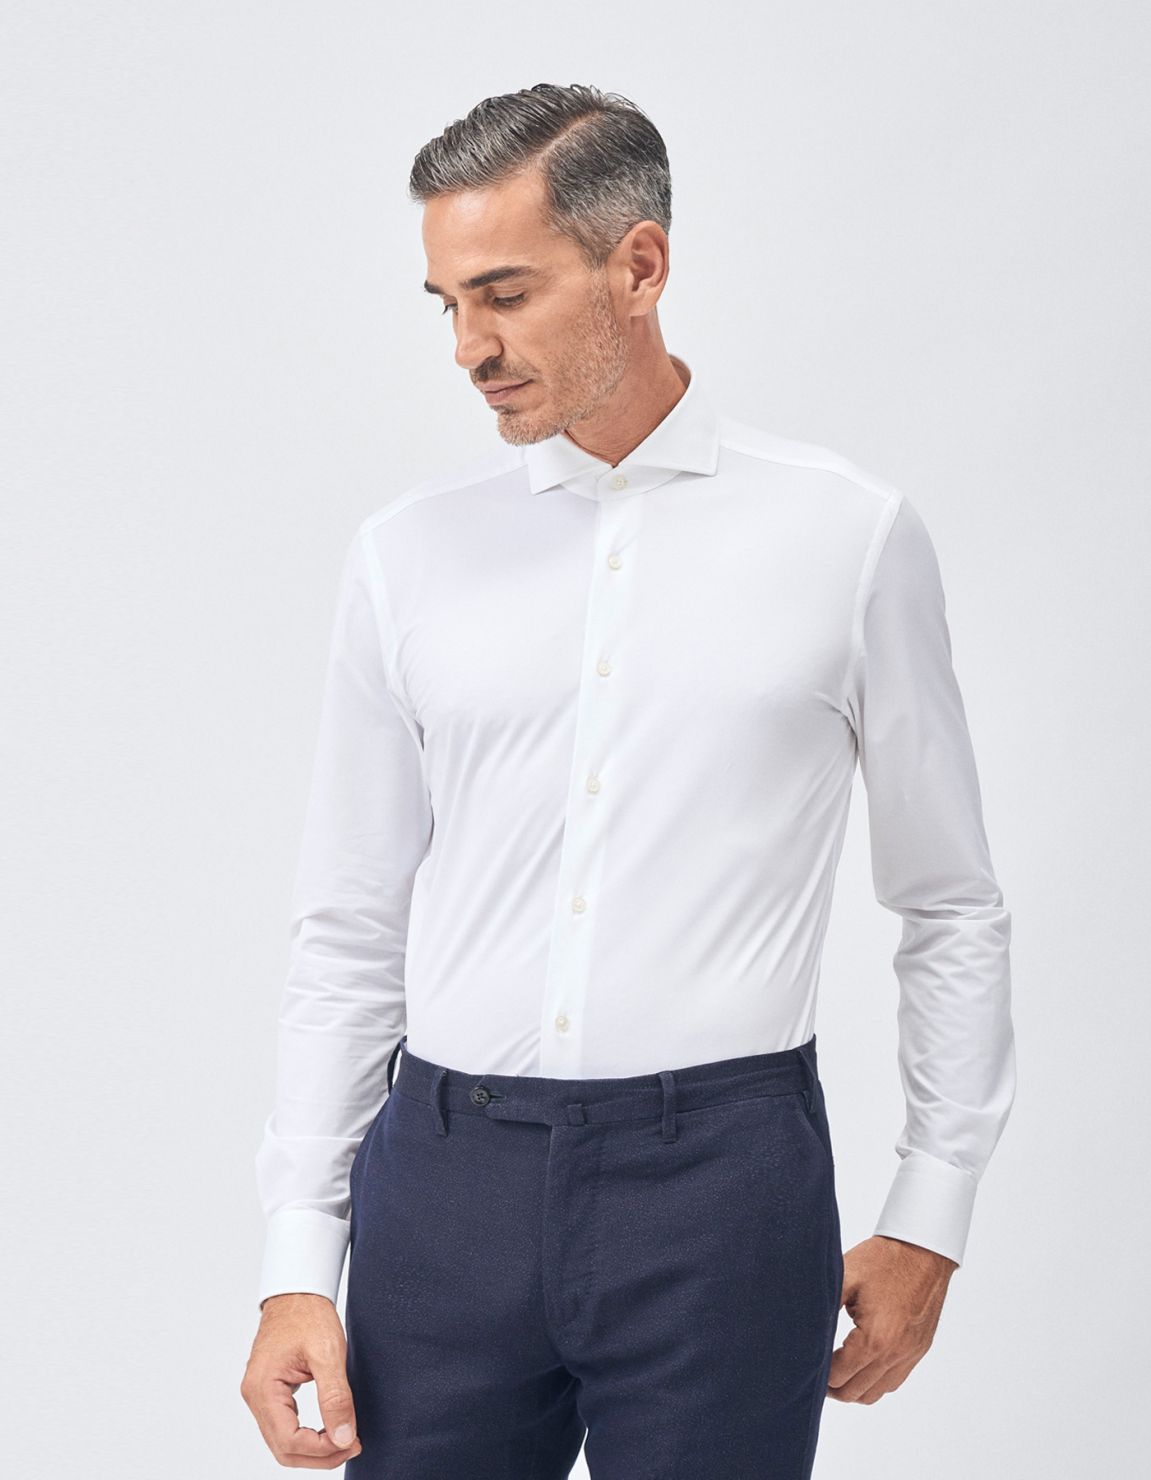 Shirt Collar cutaway White Twill Tailor Custom Fit 5